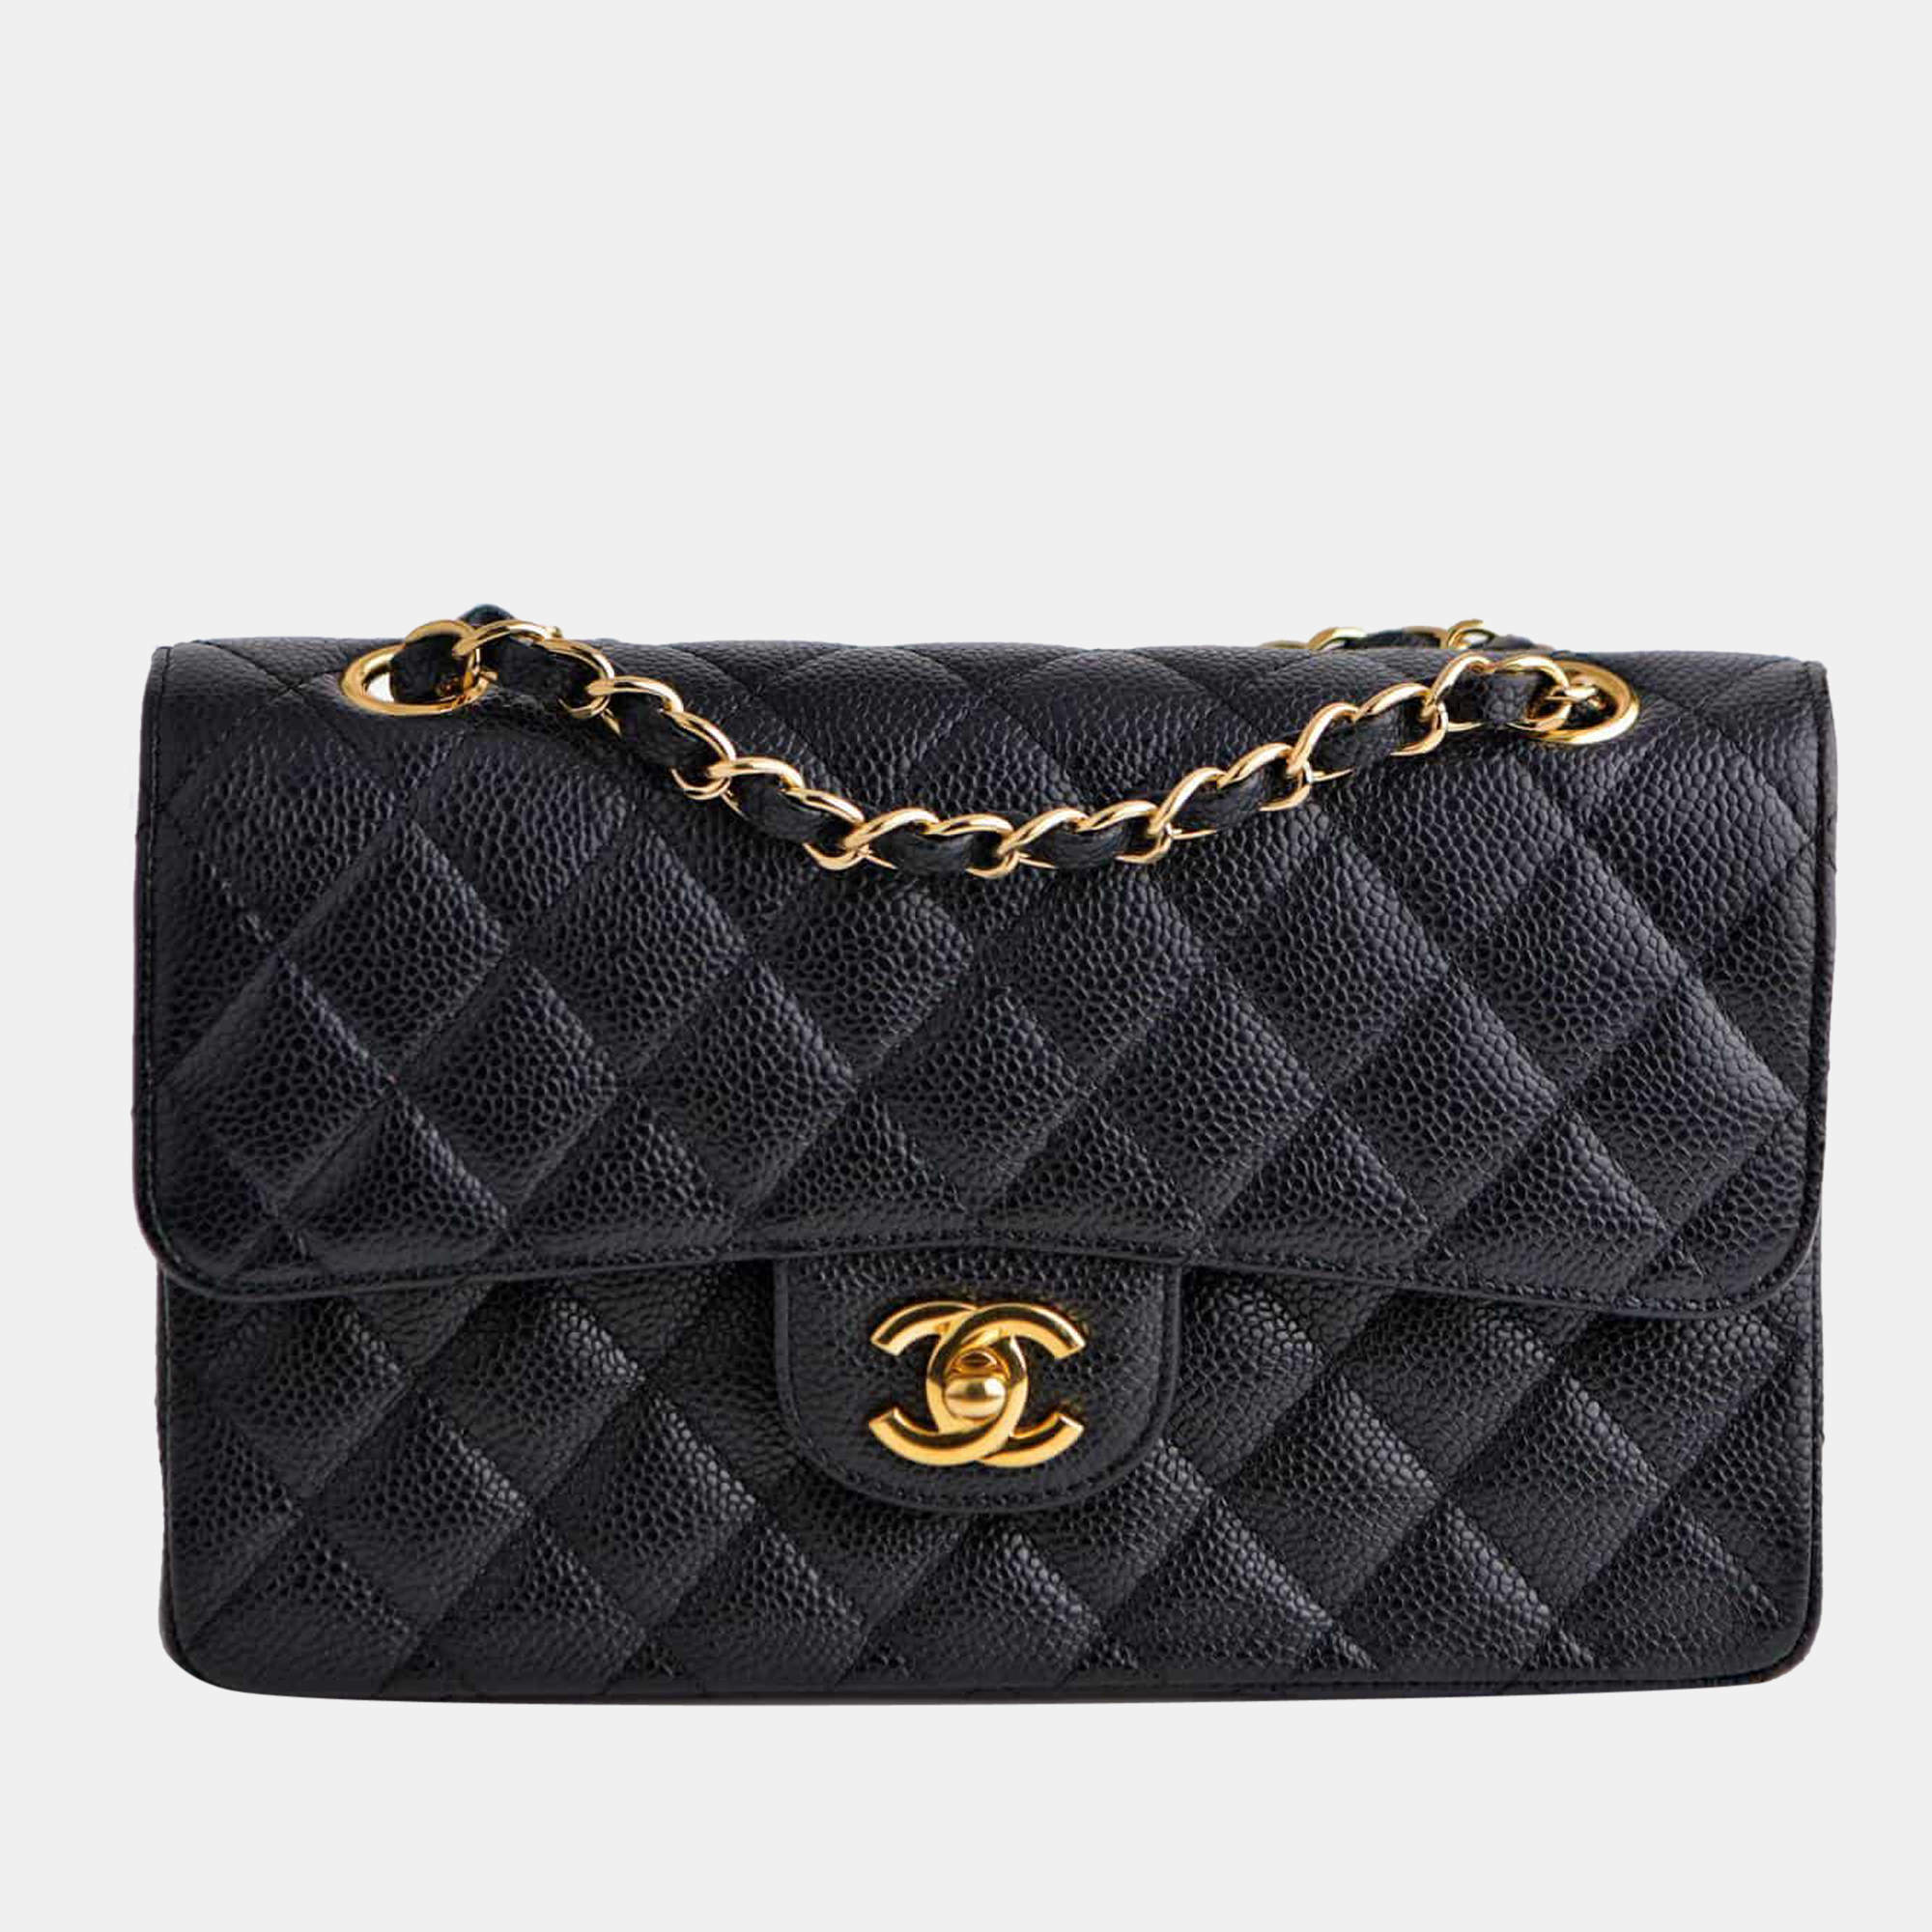 Chanel Small Double Flap Handbag